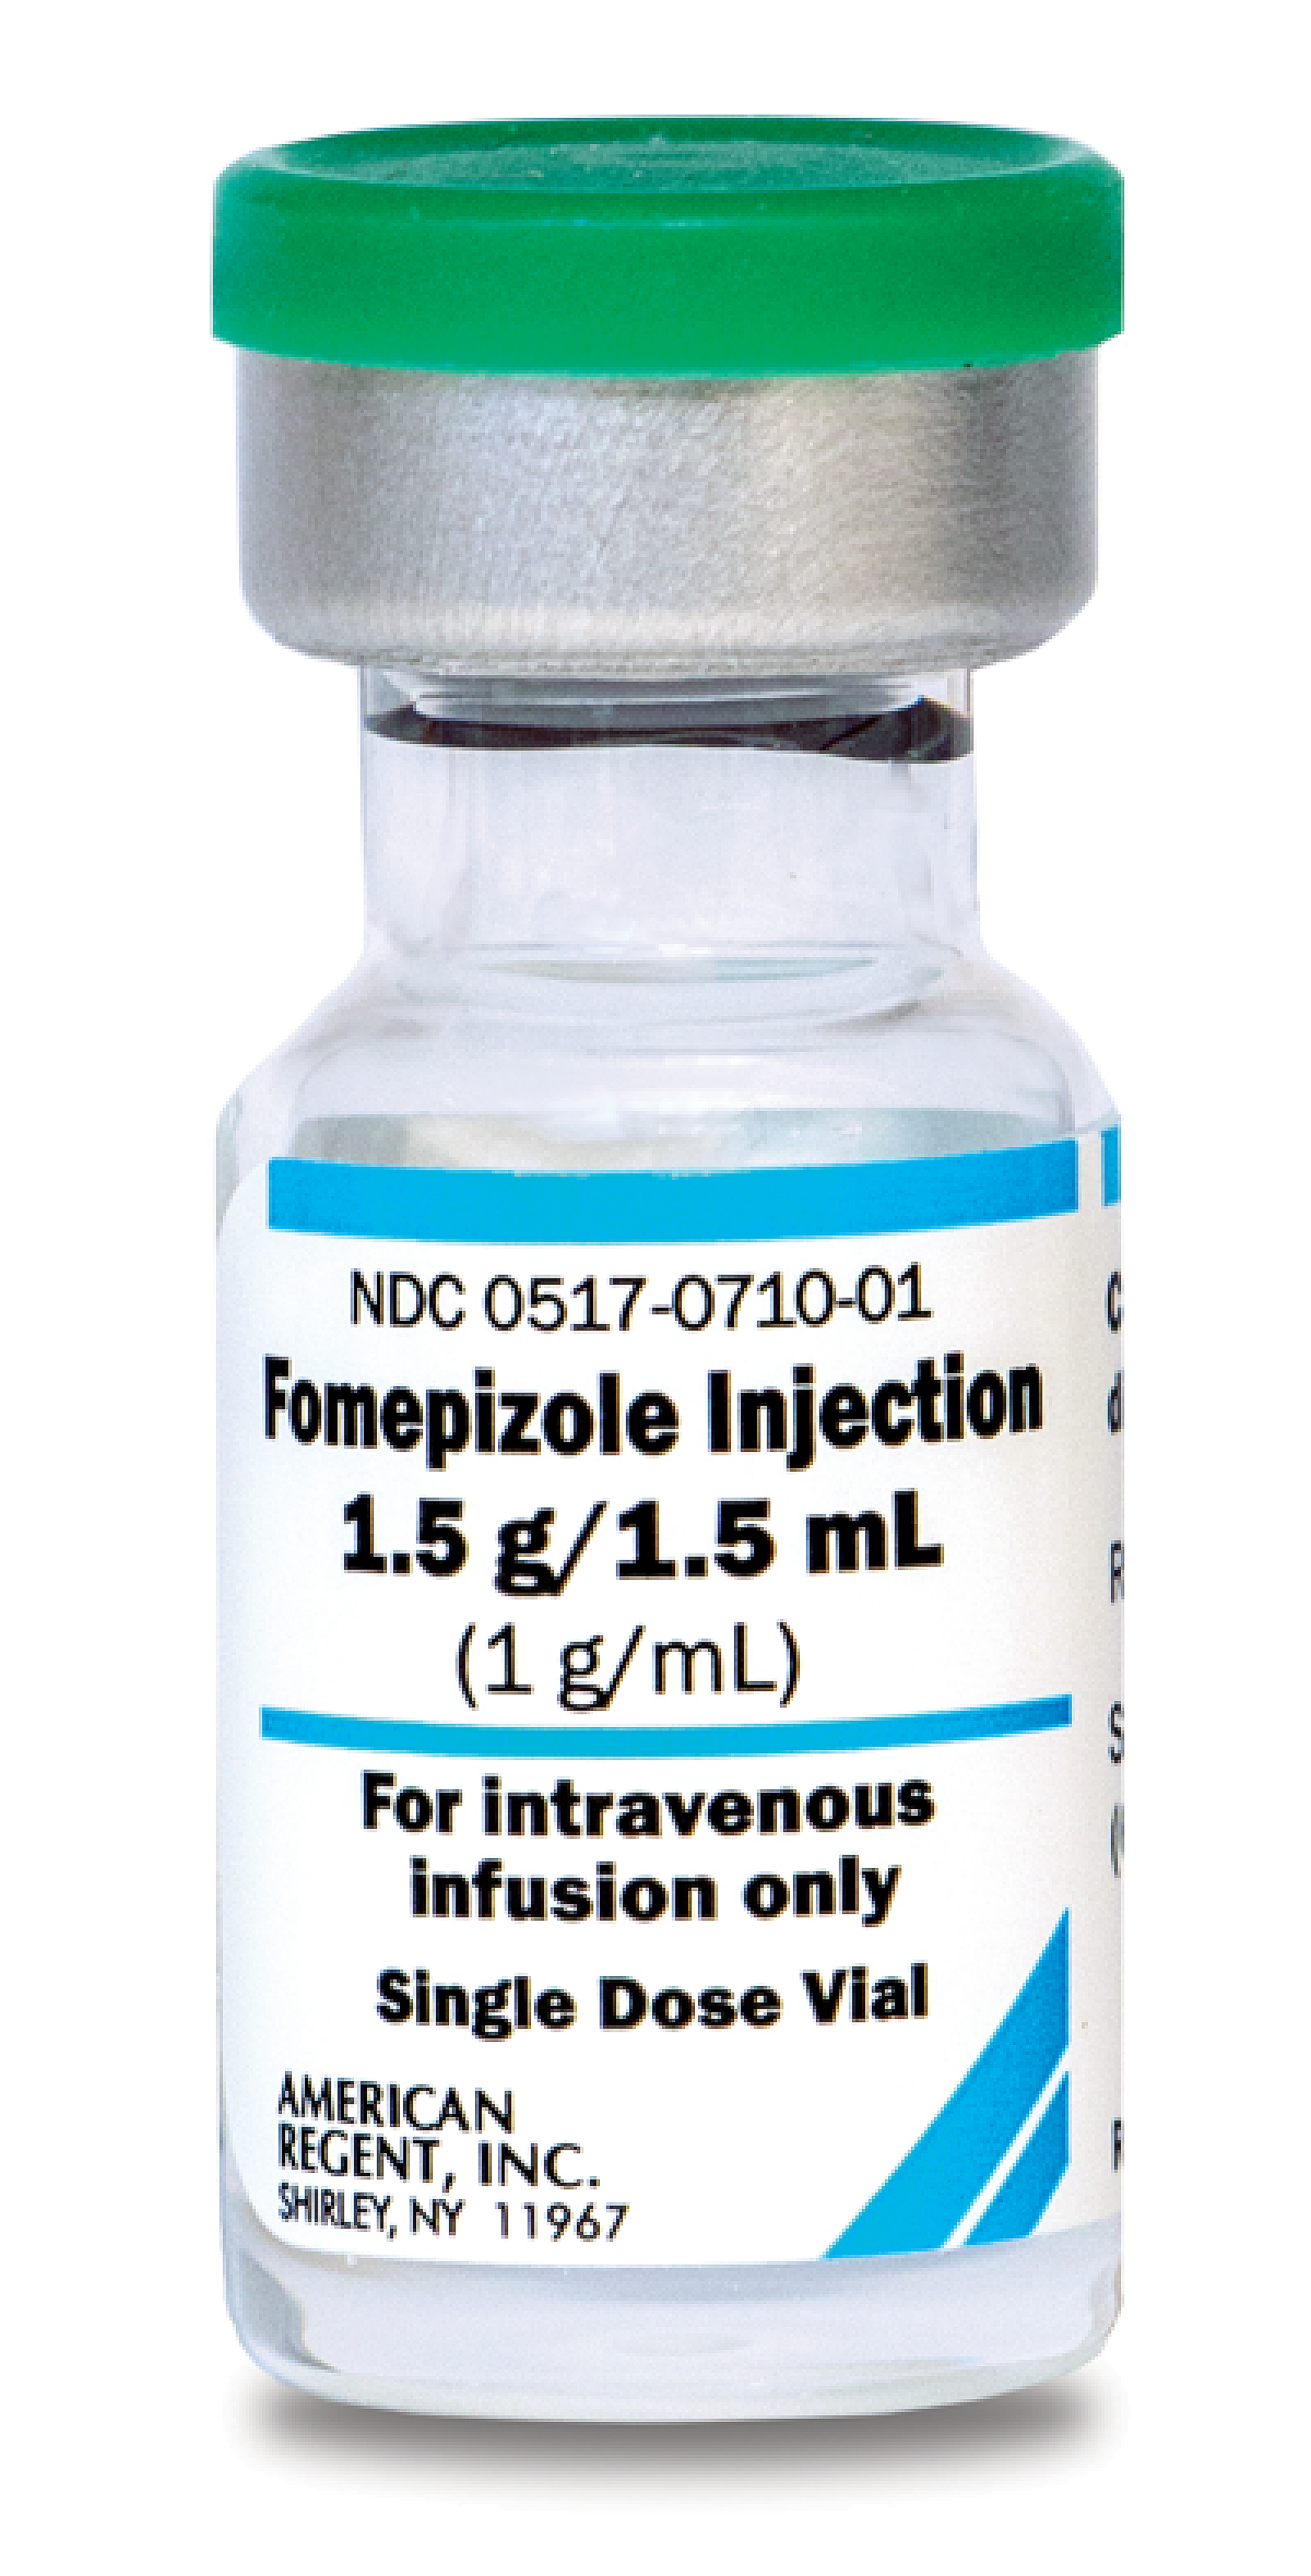 Fomepizole antidote medication vial